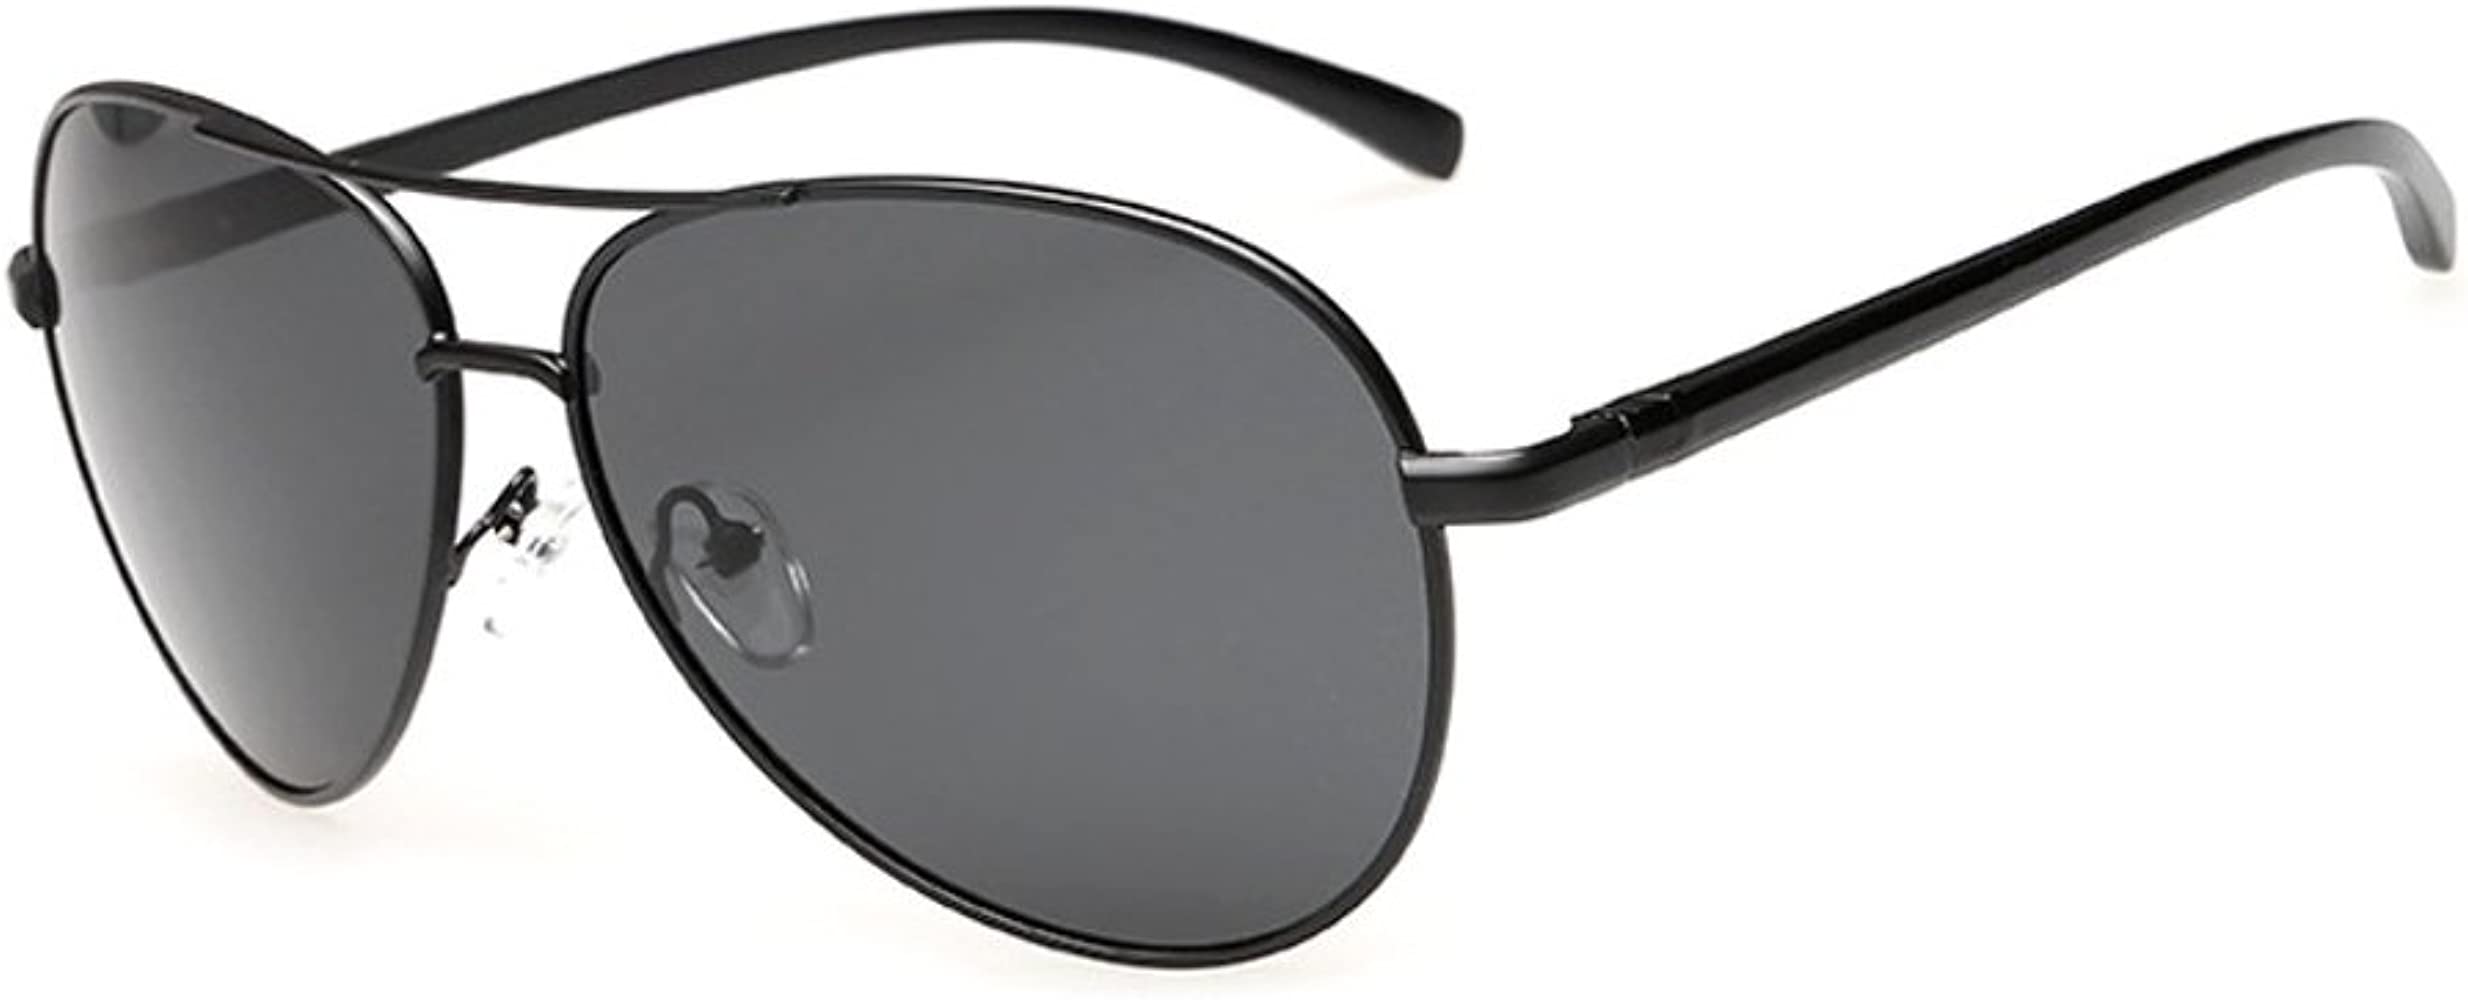 J+S-Premium-Aviator-Sunglasses